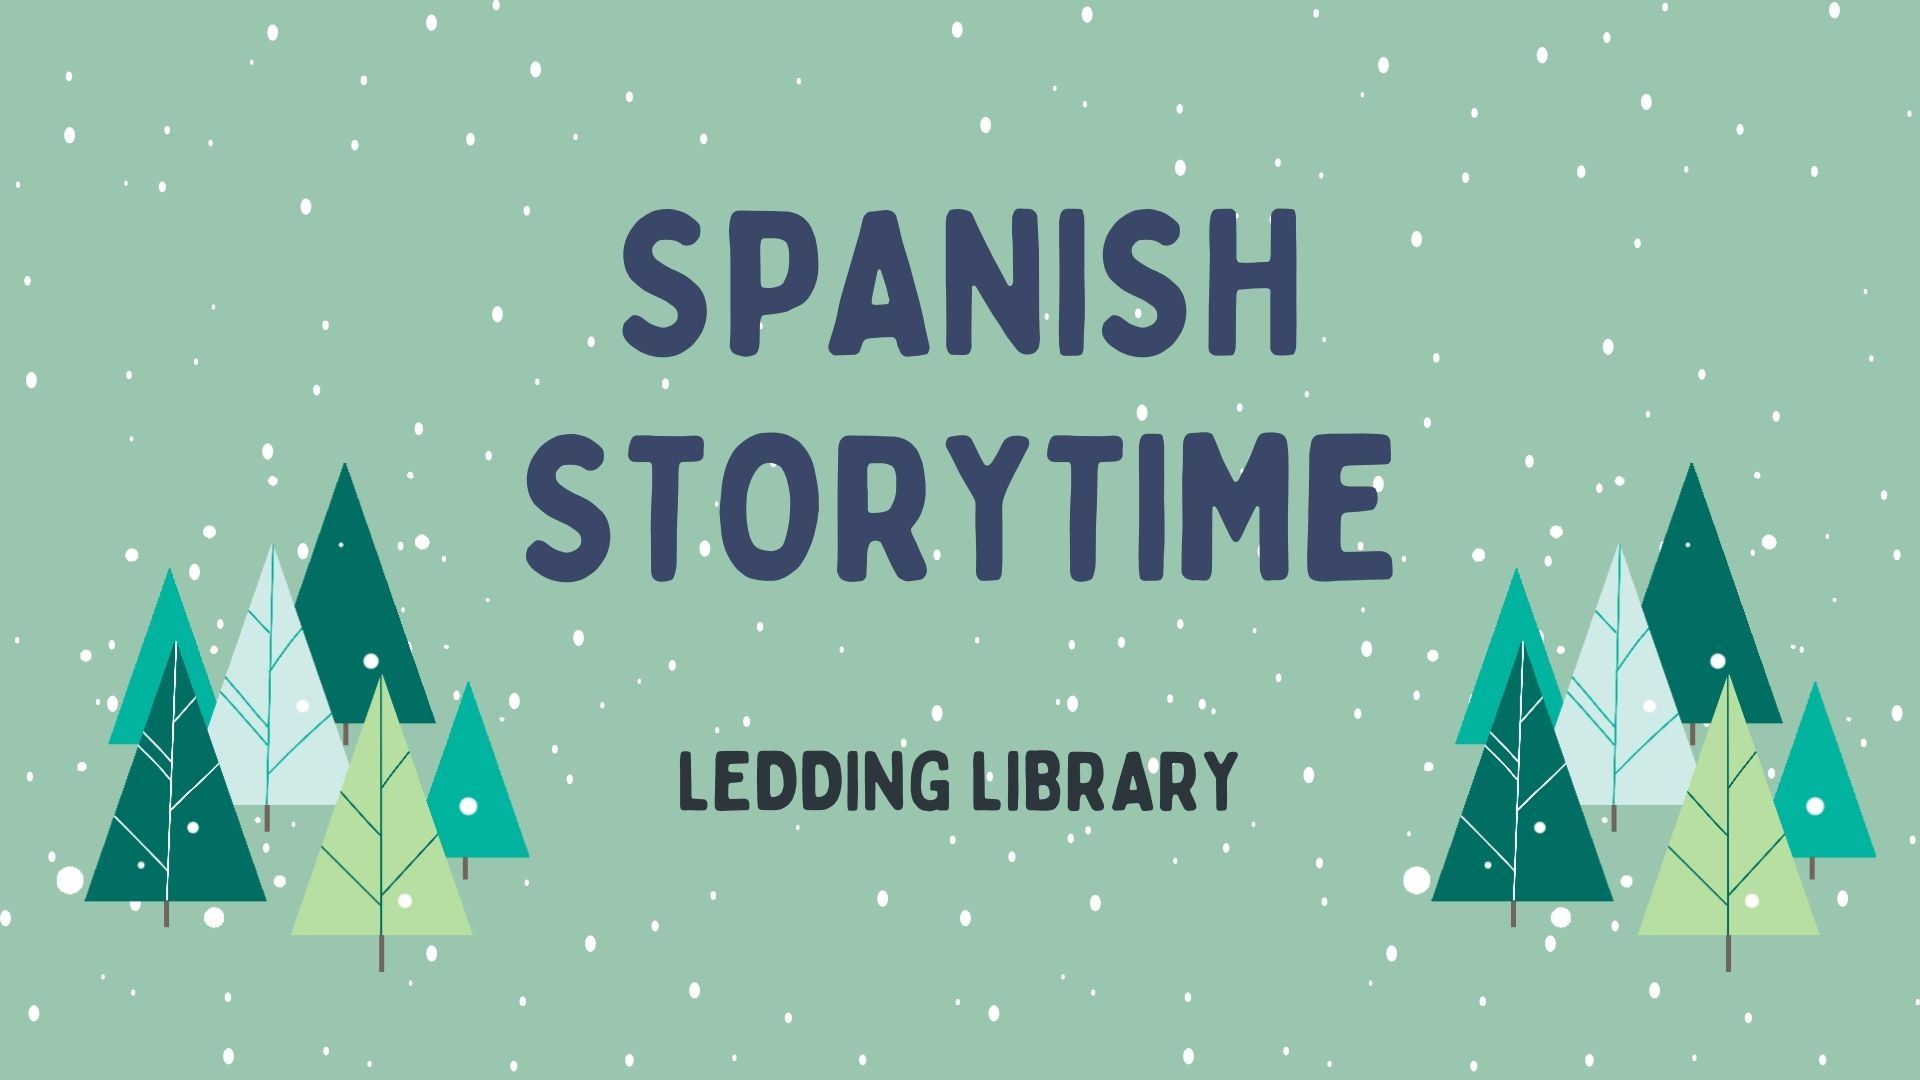 Spanish Storytime Ledding Library